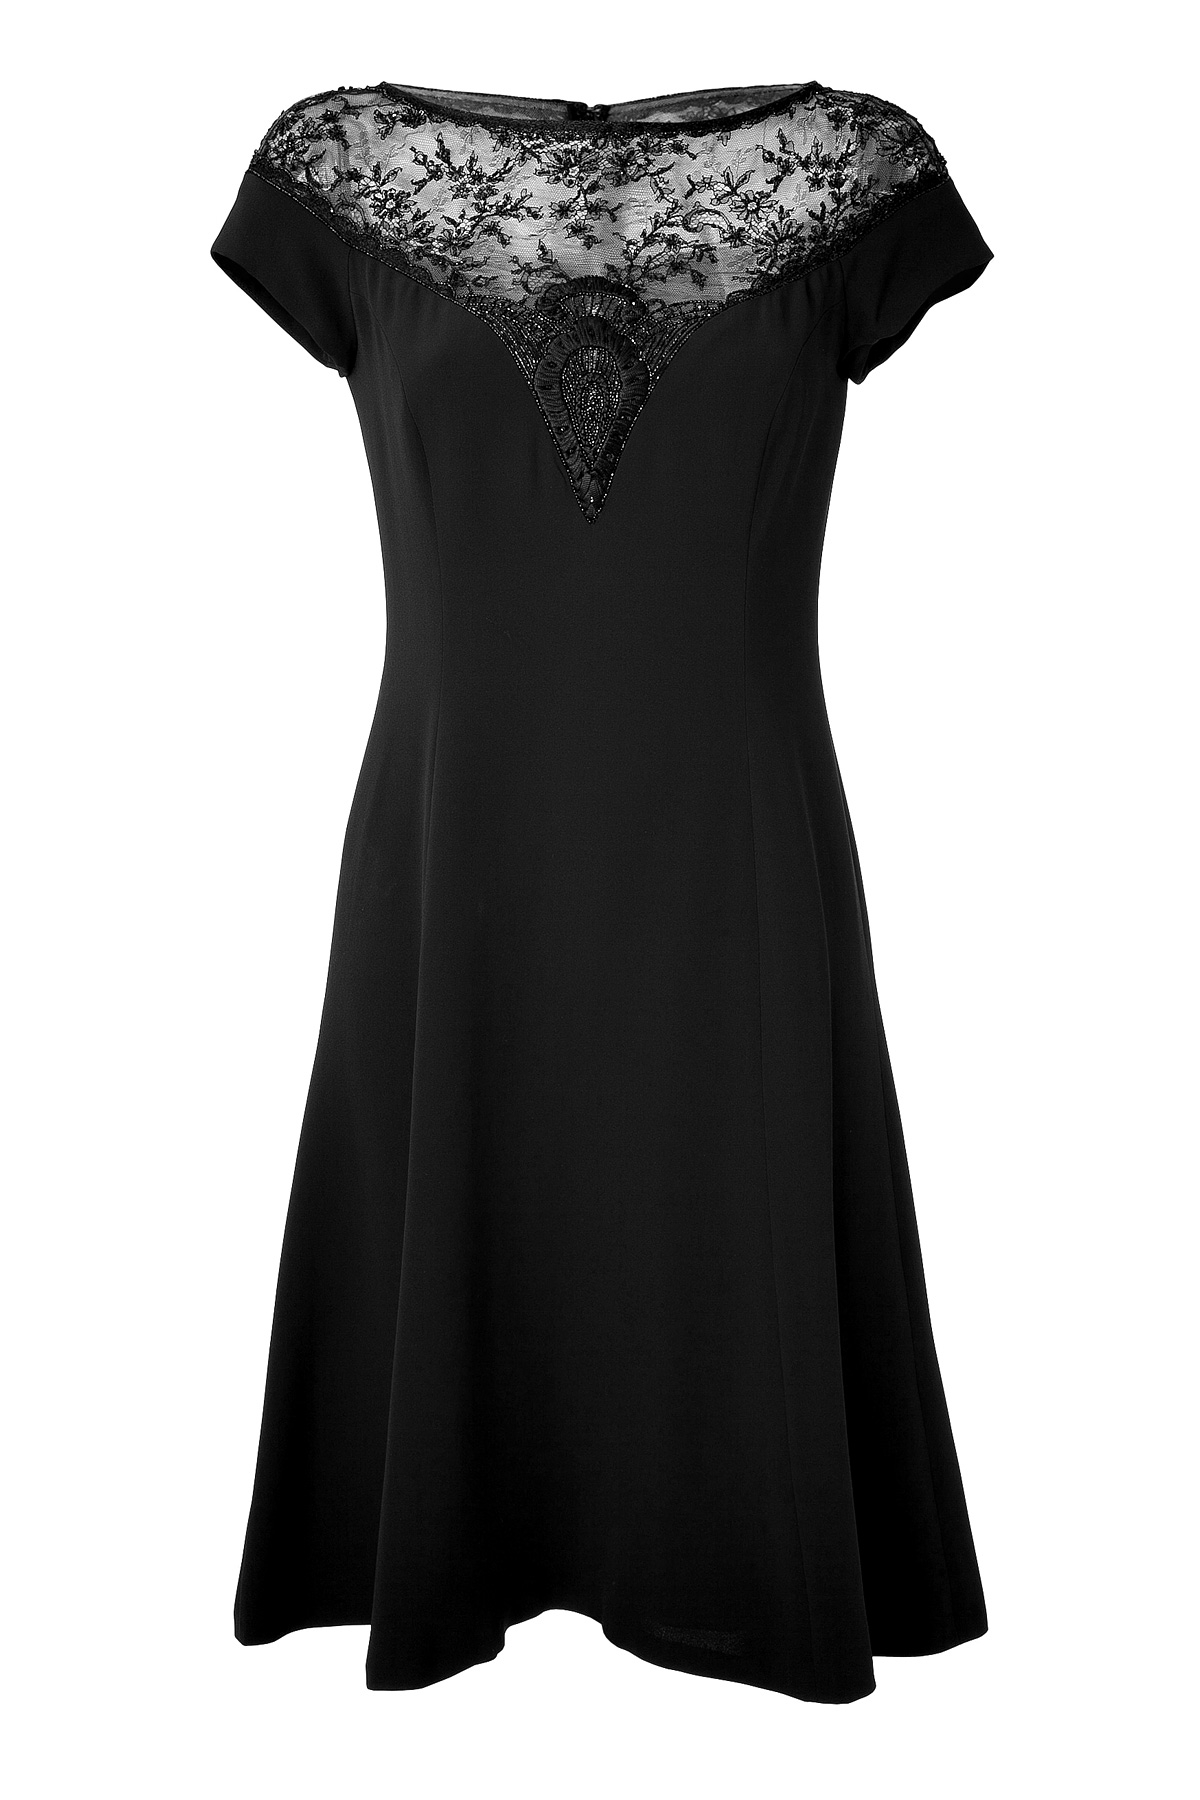 See Black Lace Cocktail Dresses See Black Cocktail Dresses